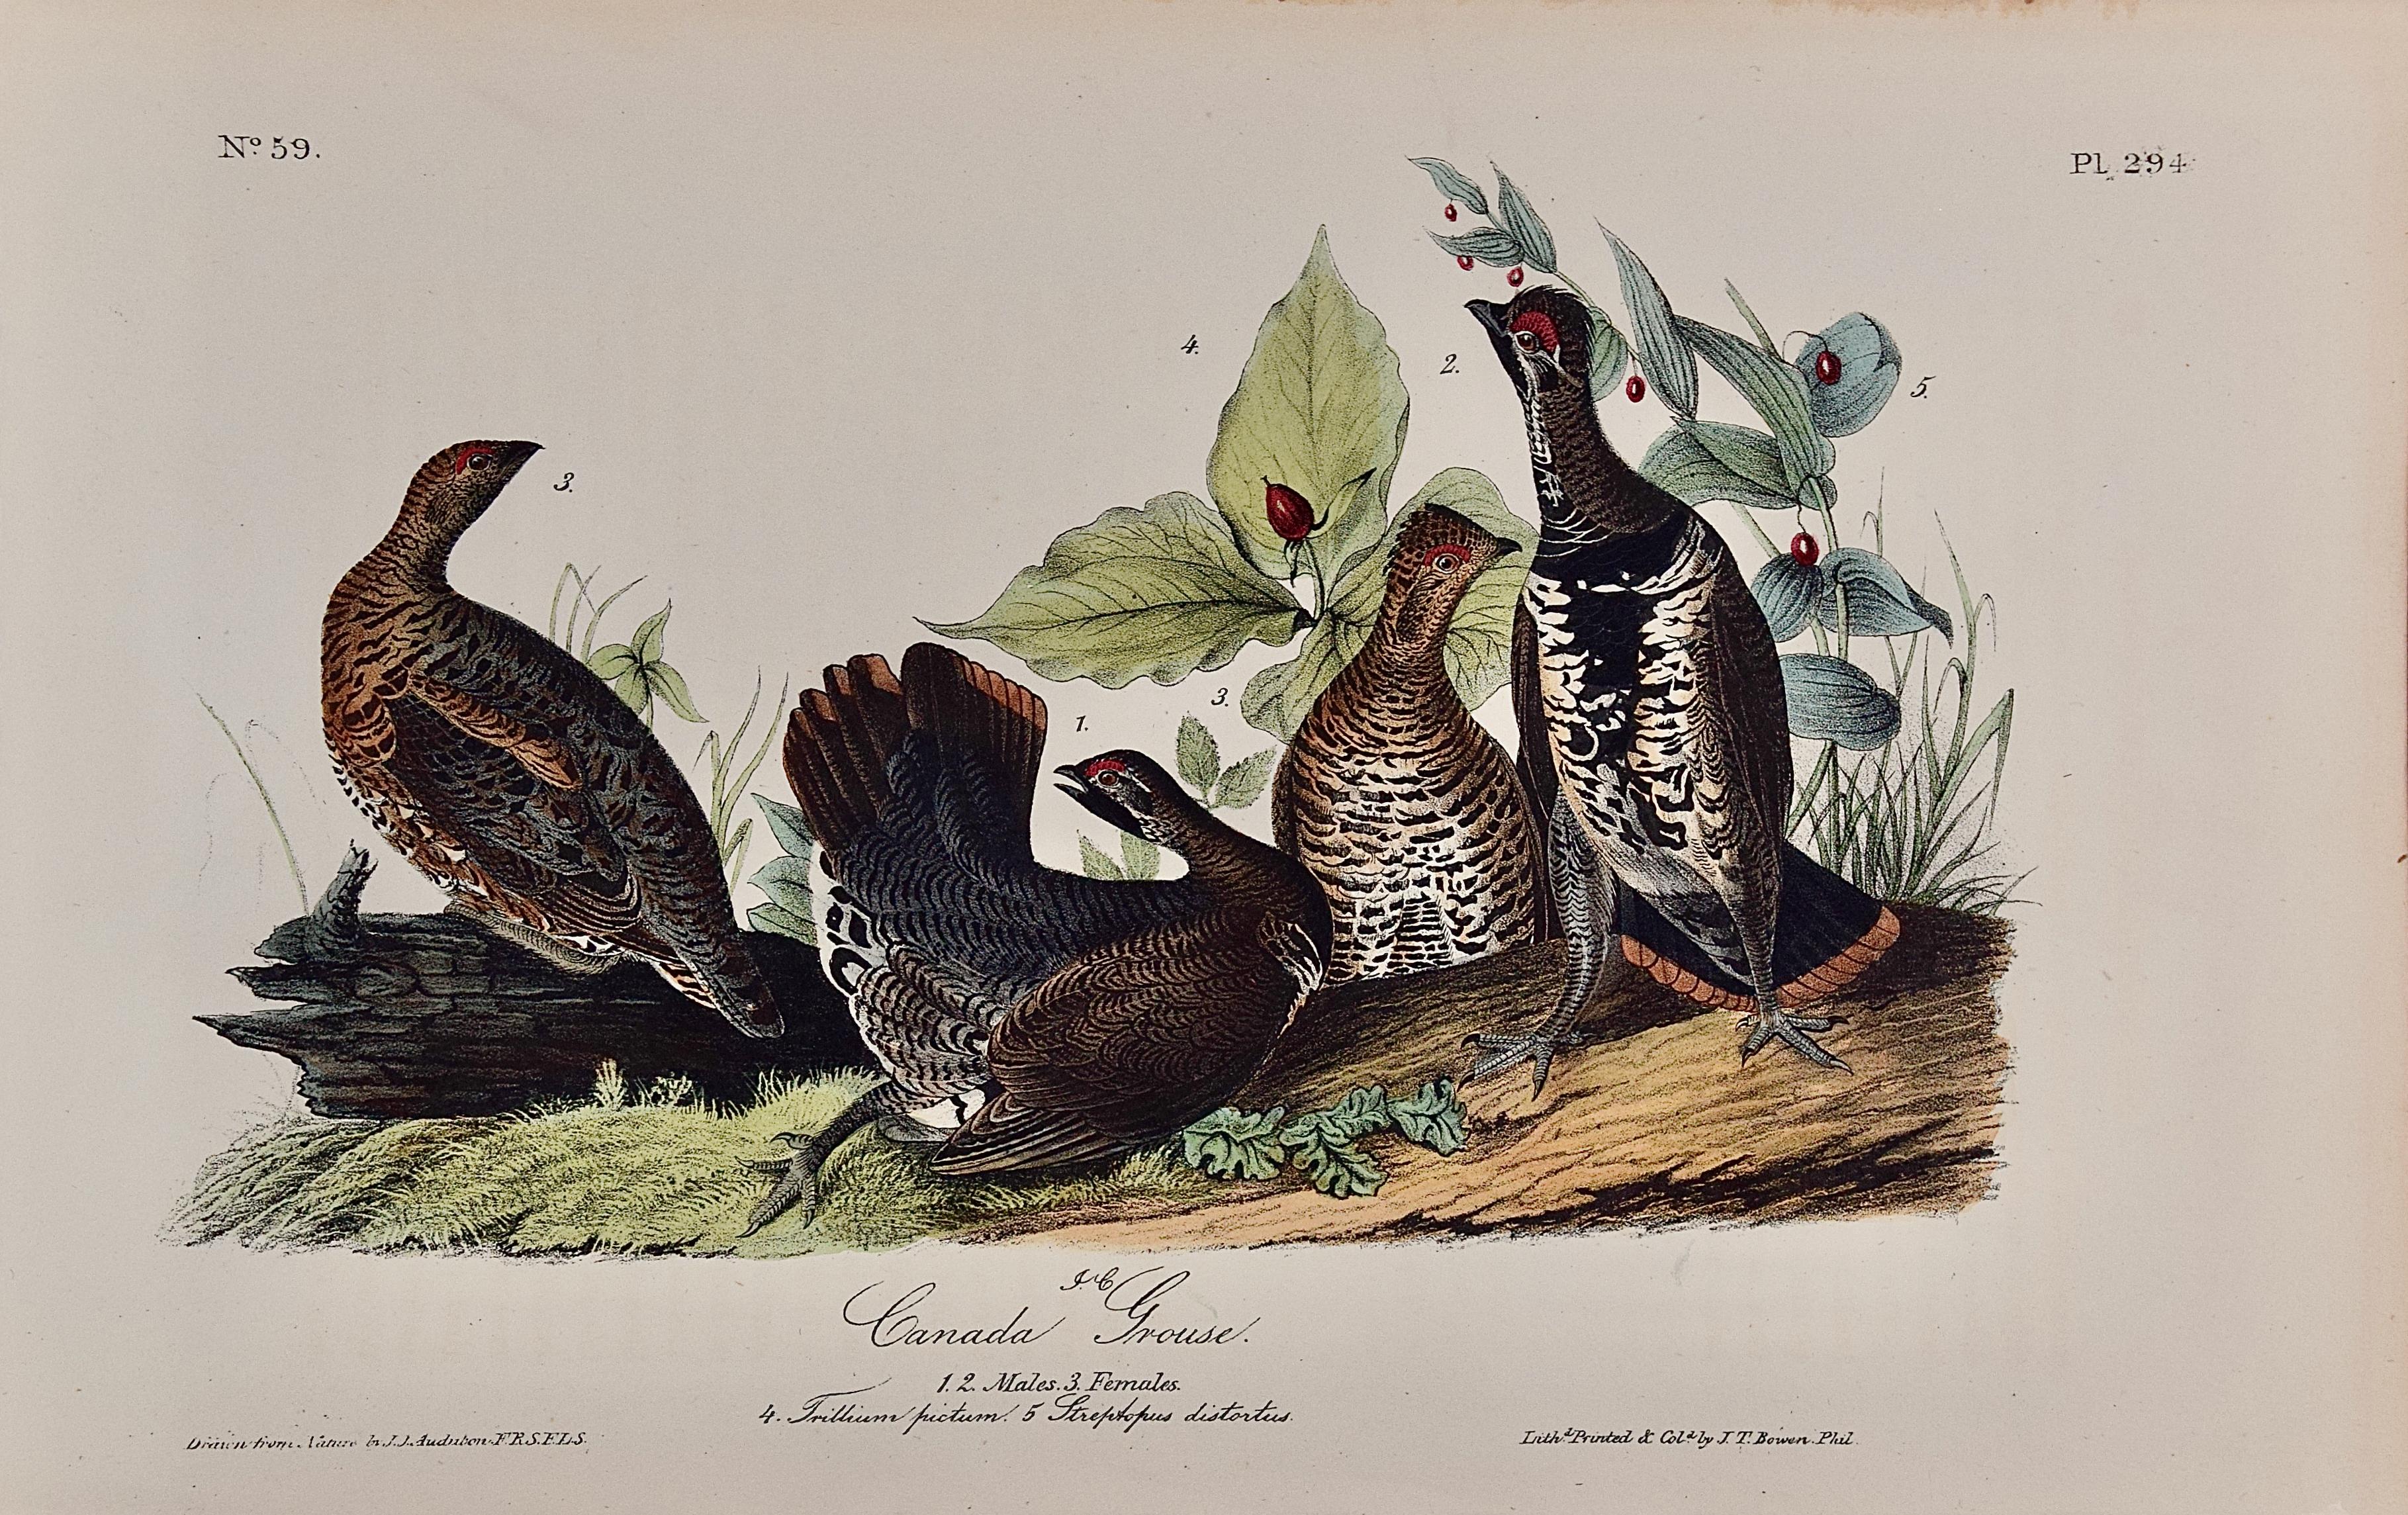 John James Audubon Animal Print - Canada Grouse: An Original 19th C. Audubon 1st Ed. Hand-colored Bird Lithograph